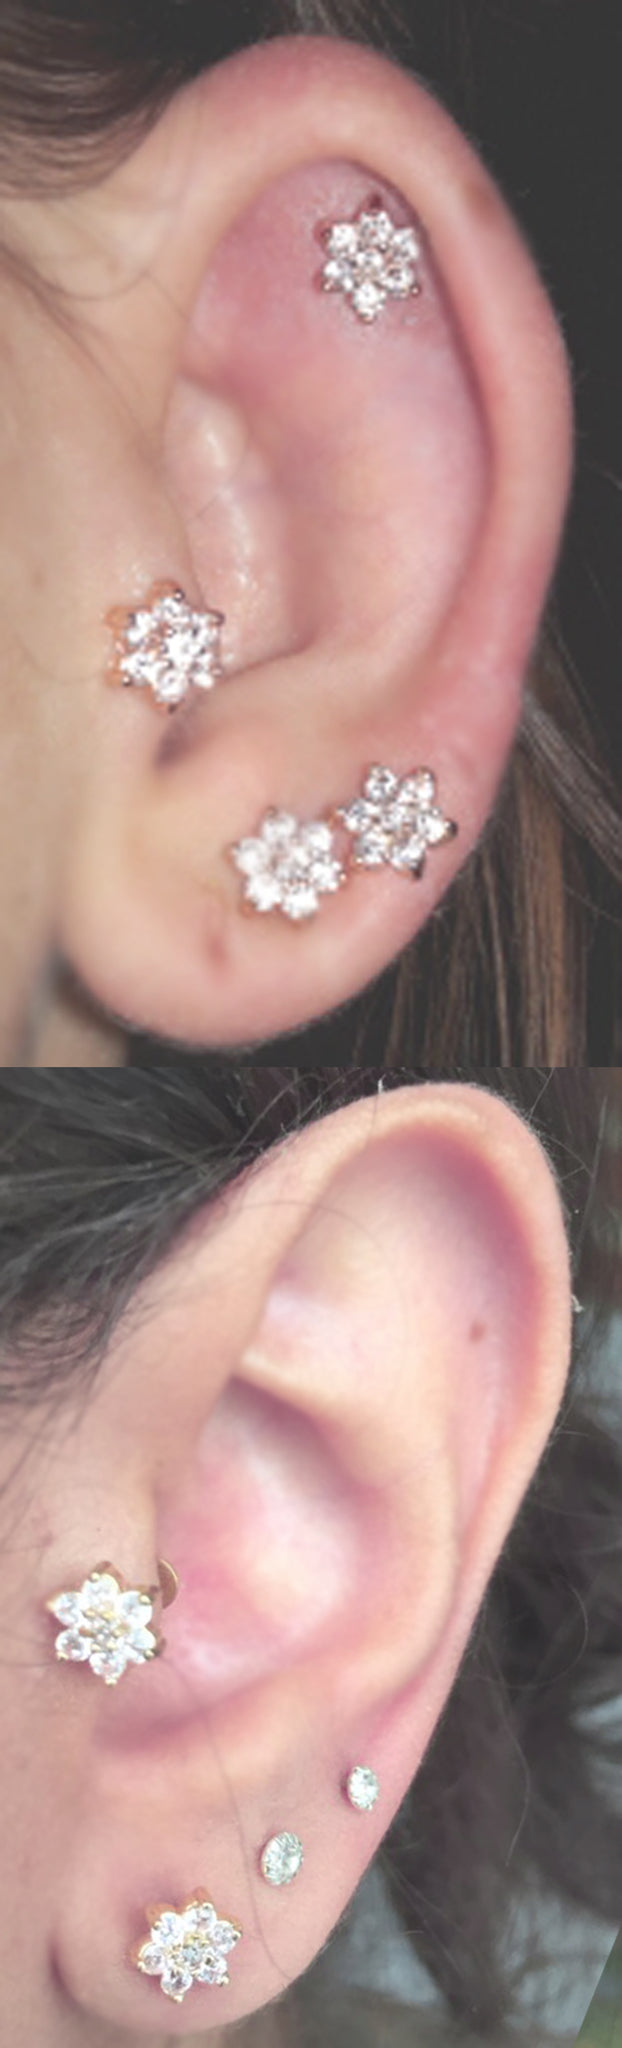 Dainty Ear Piercing Combinations Ideas for Upper Ear, Cartilage, Tragus, Conch, Rook, Daith - Crystal Flower Earring Stud 16G